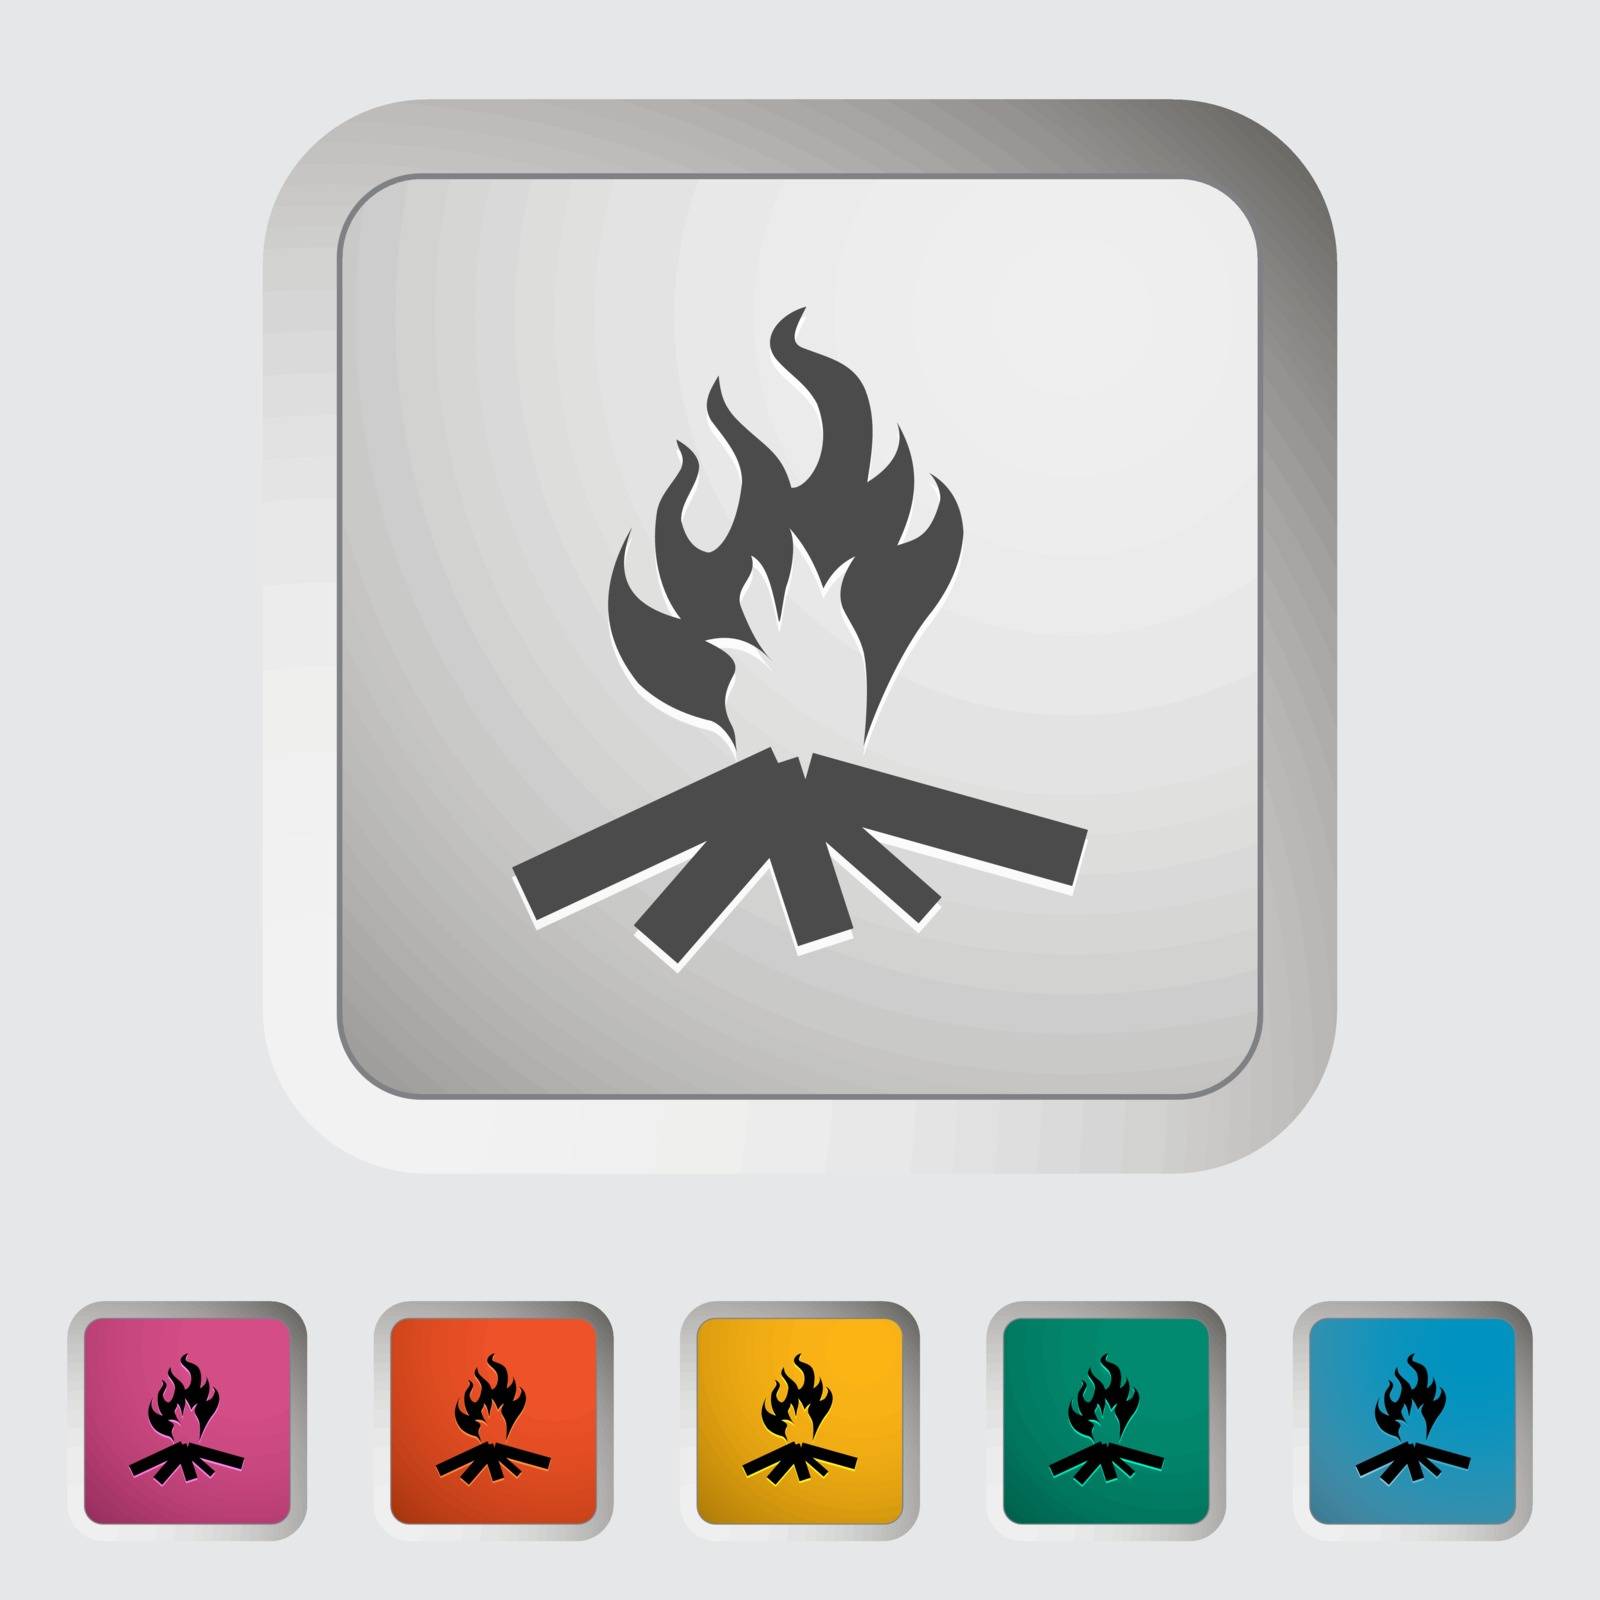 Bonfire. Single icon. Vector illustration.